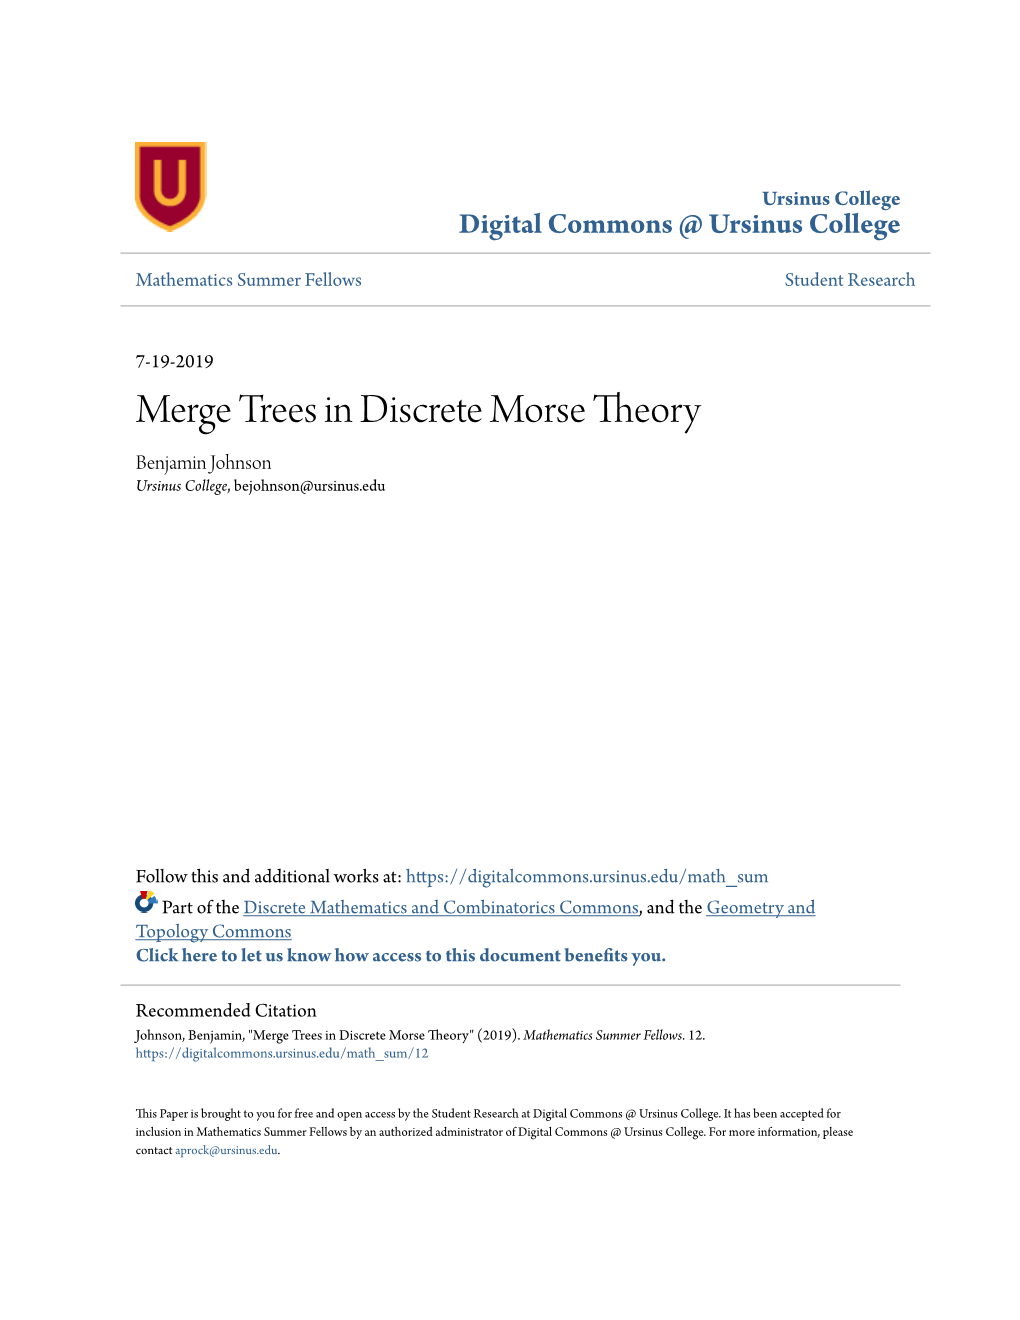 Merge Trees in Discrete Morse Theory Benjamin Johnson Ursinus College, Bejohnson@Ursinus.Edu